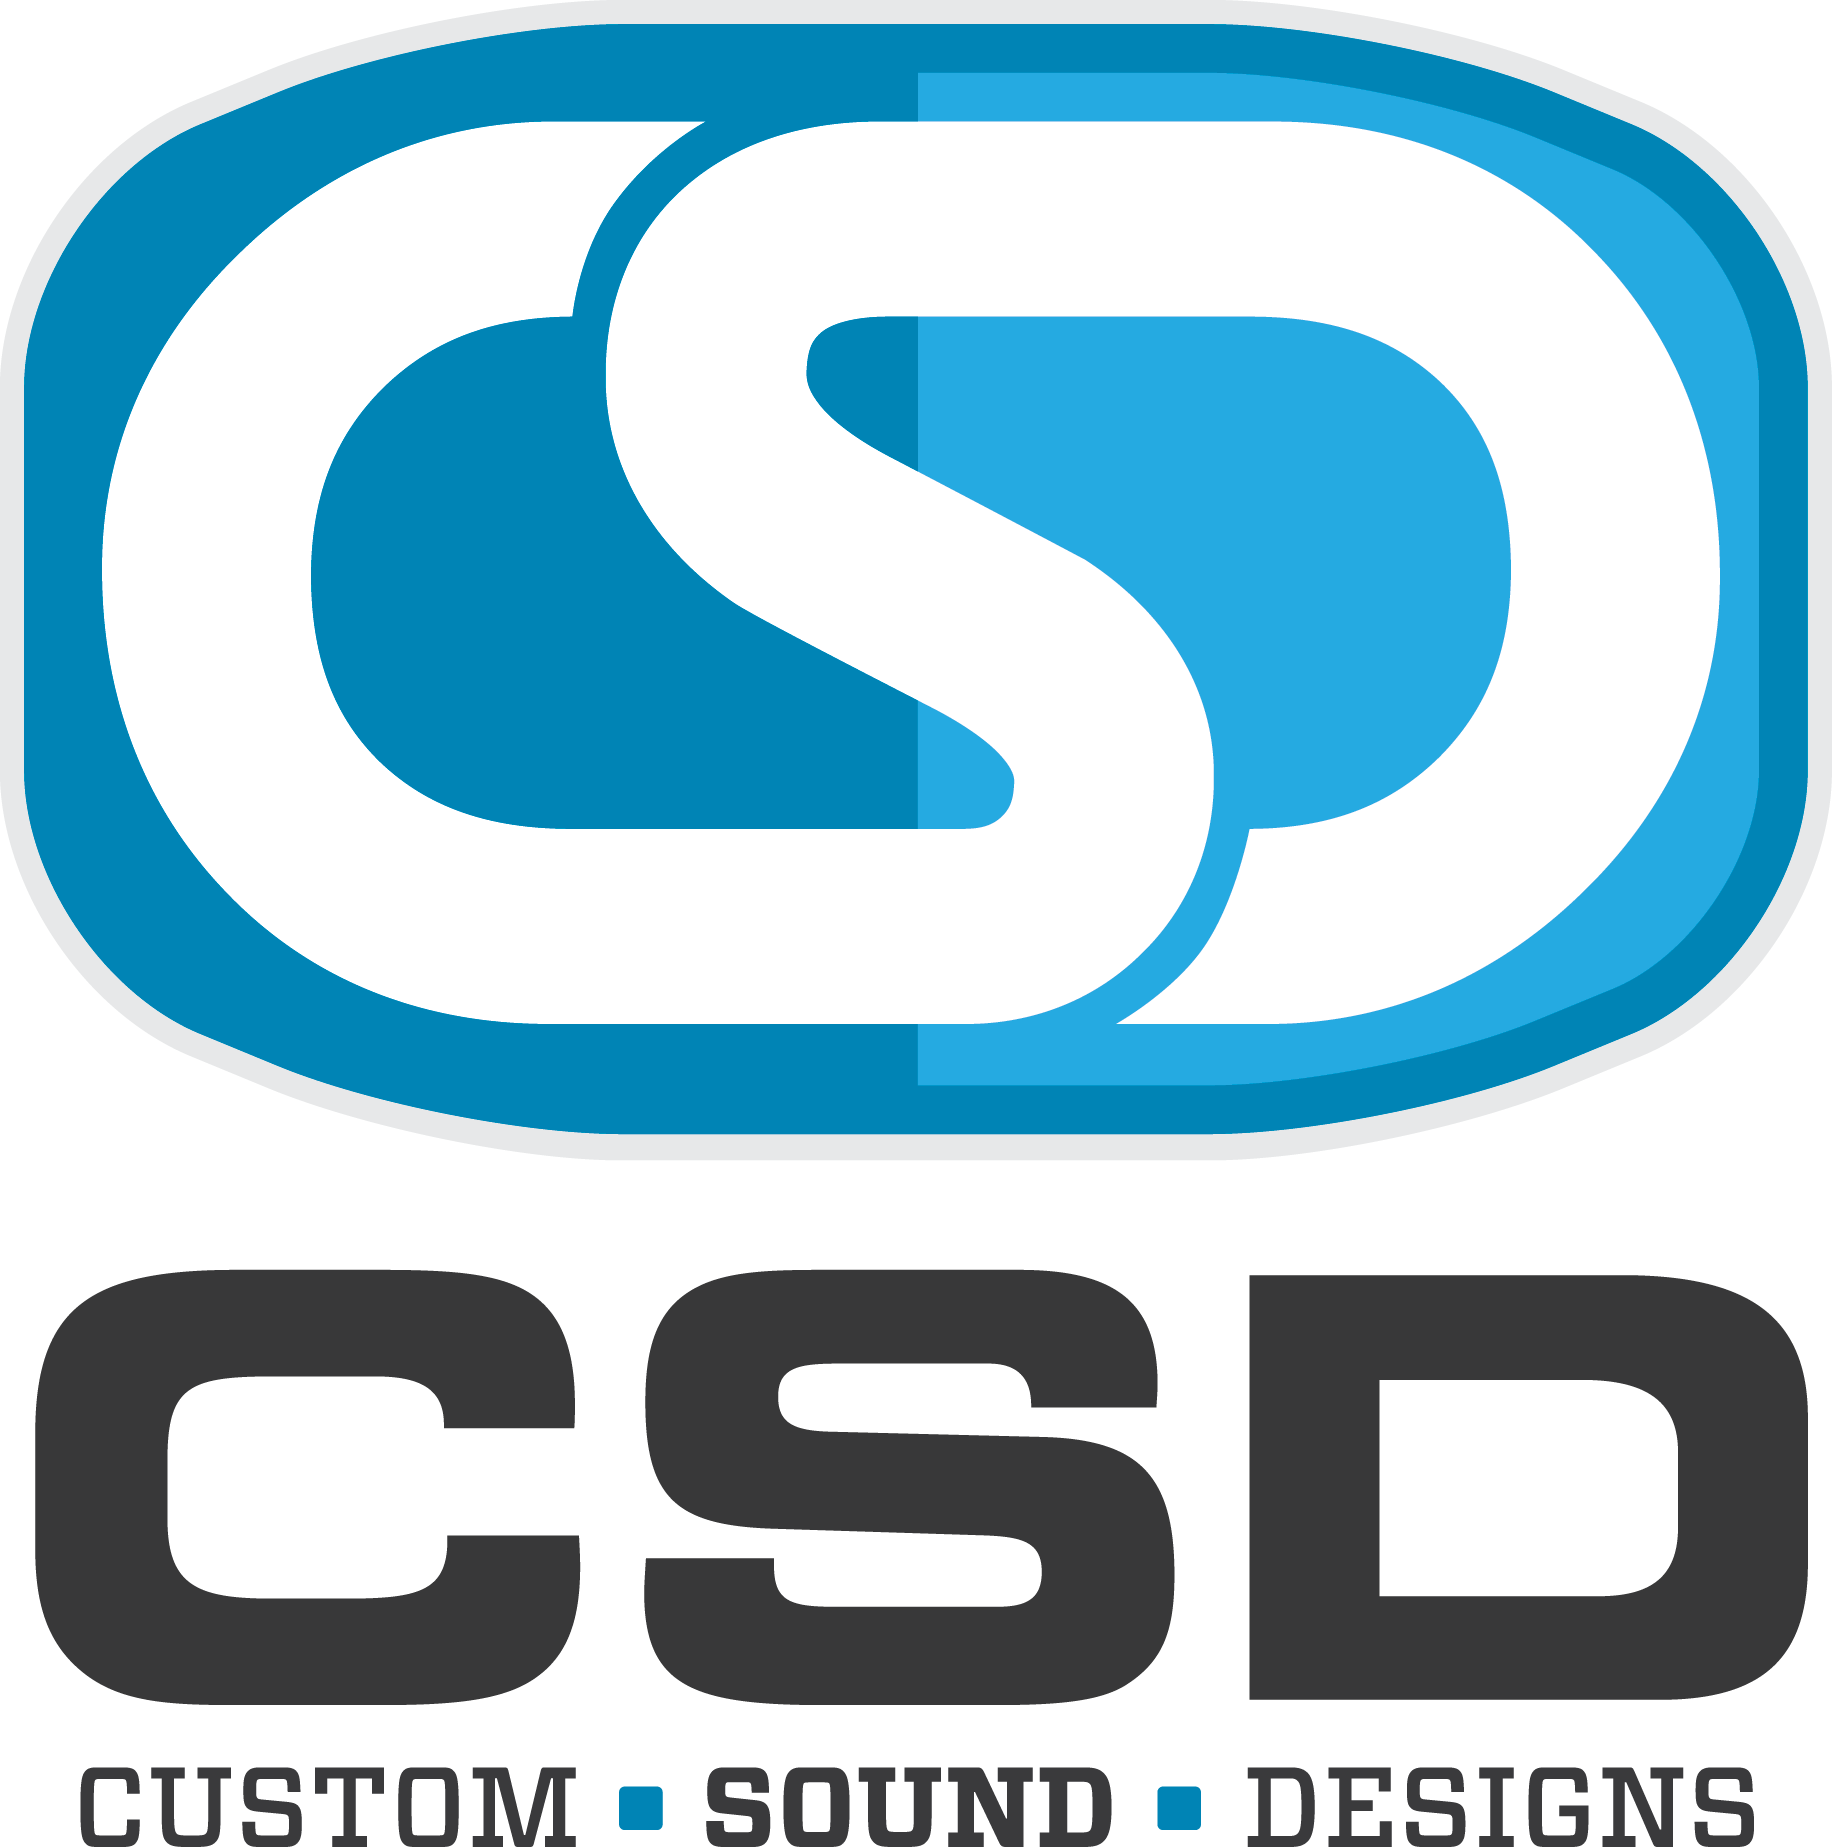 CSD Logo - CSD Group, Inc. Better Business Bureau® Profile